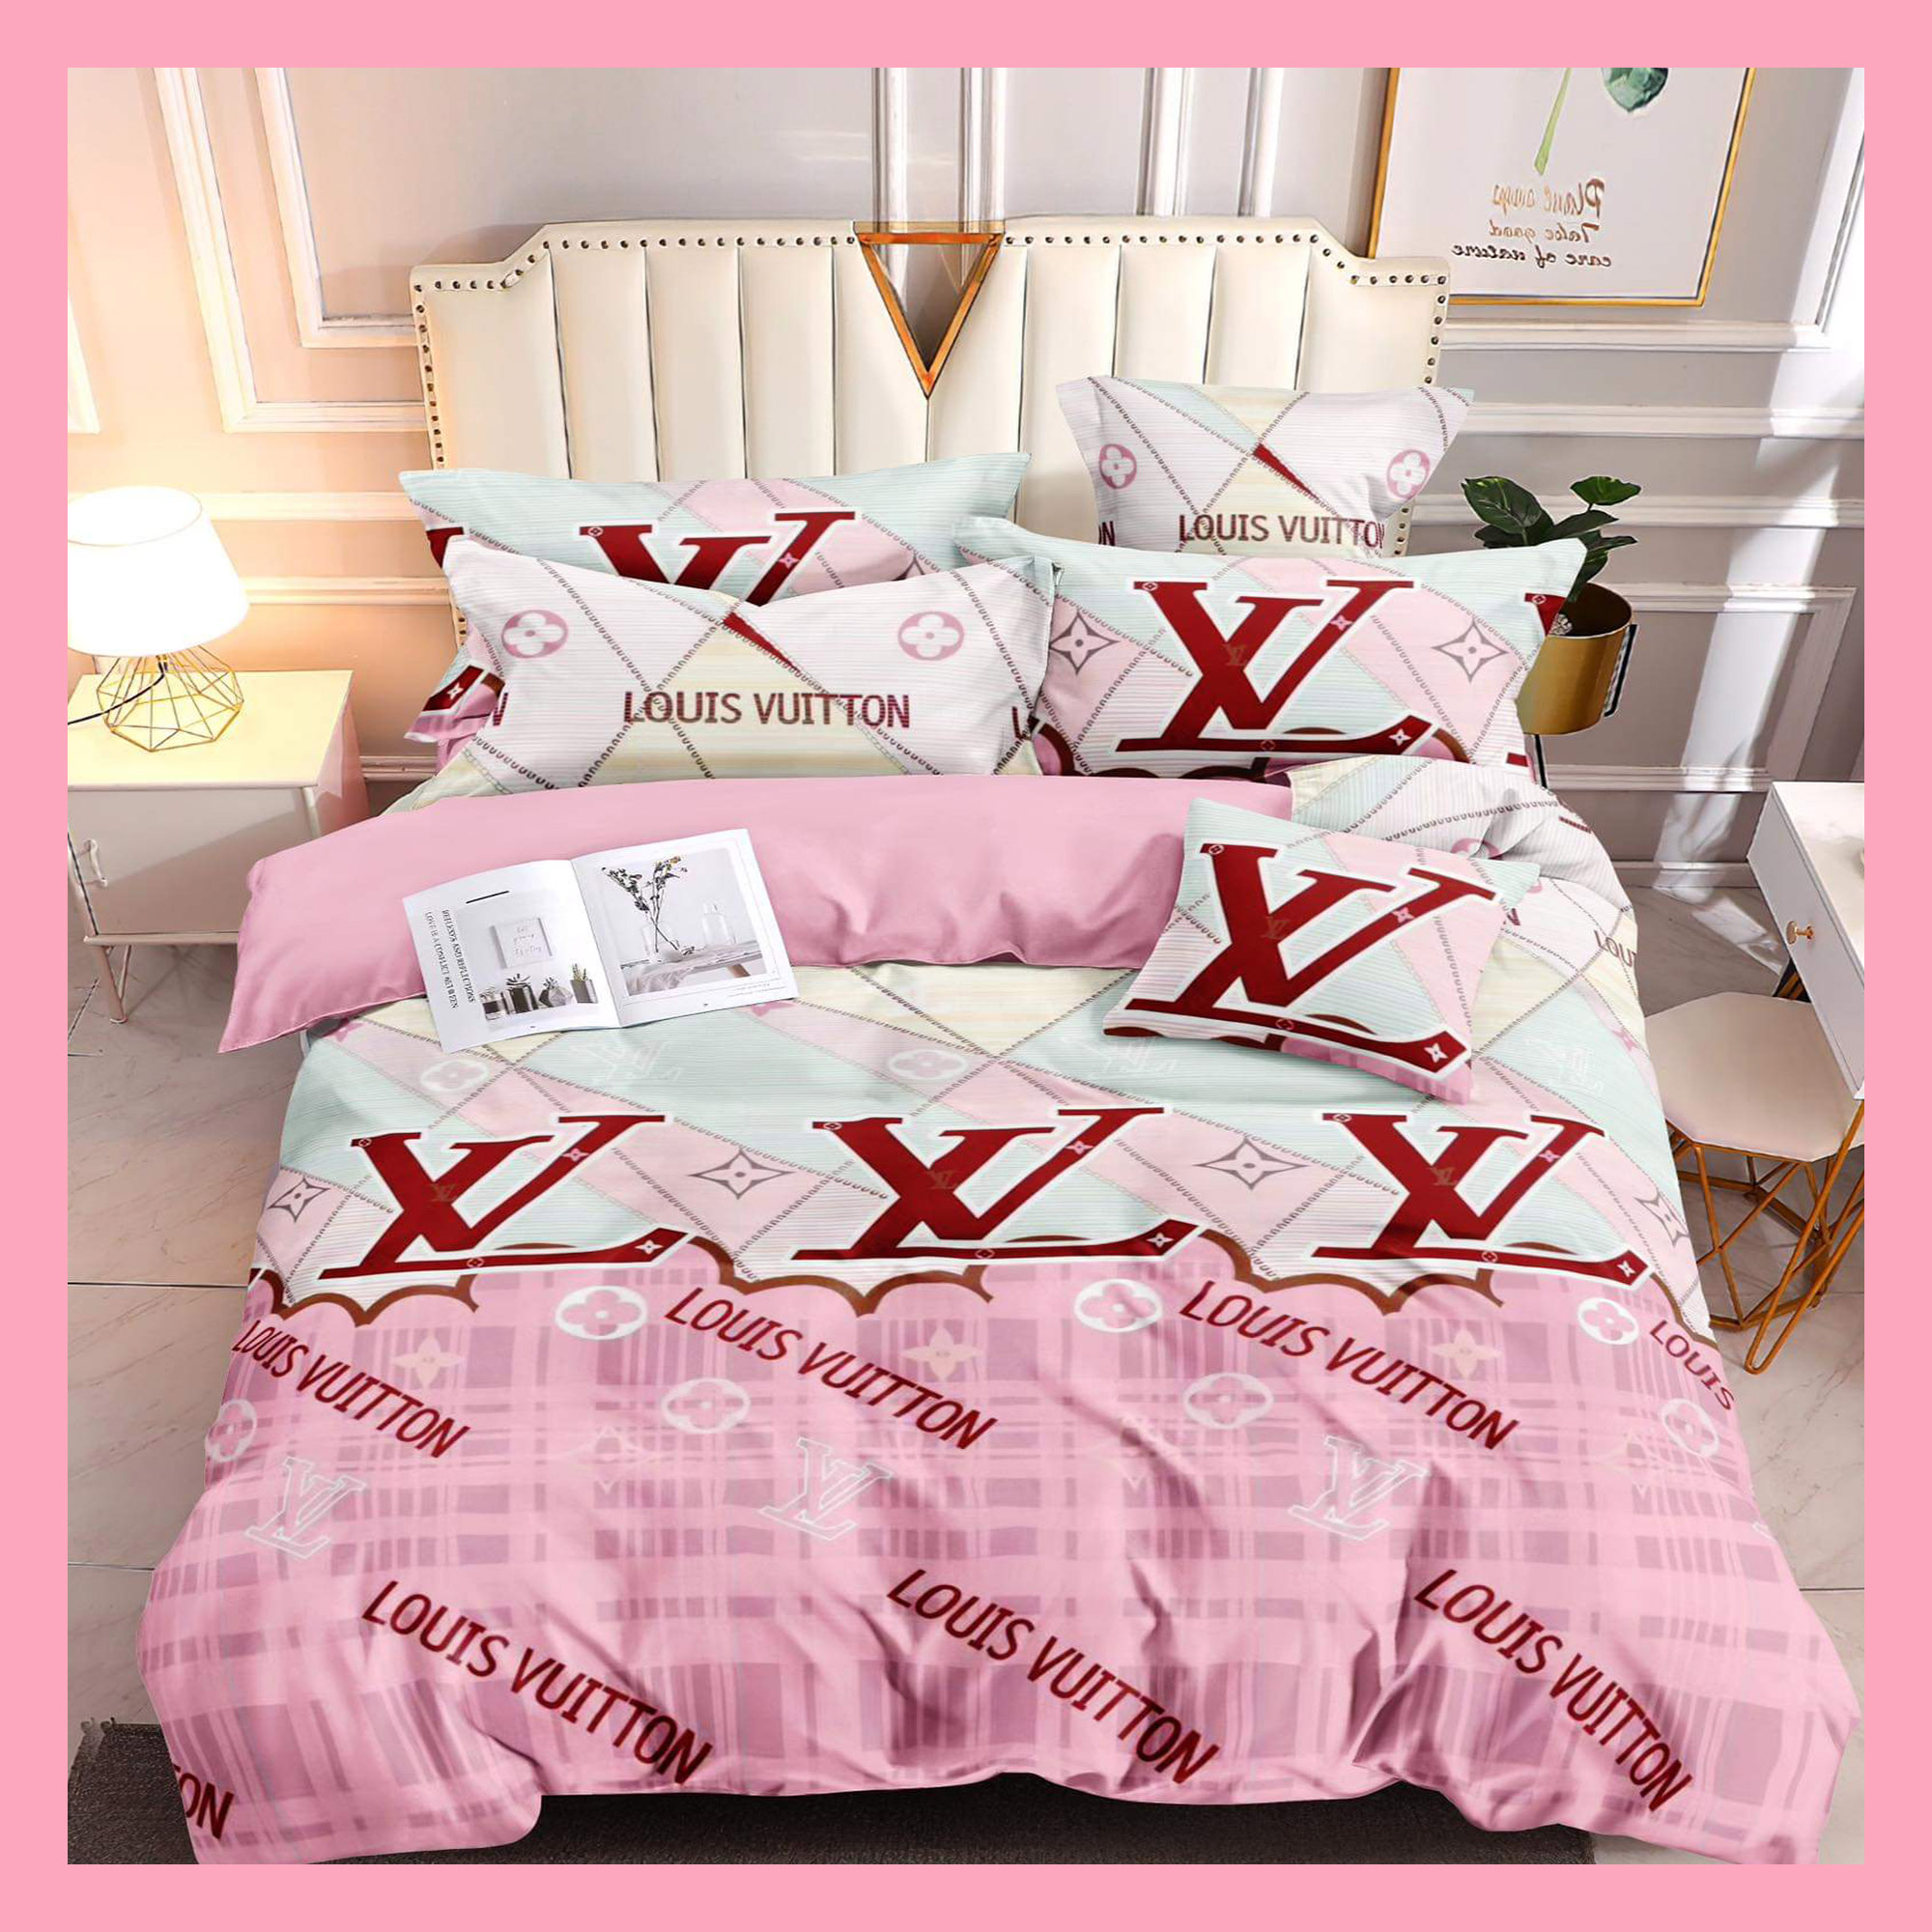 lv13 louis vuitton custom bedding set #1 (duvet cover & pillowcases)